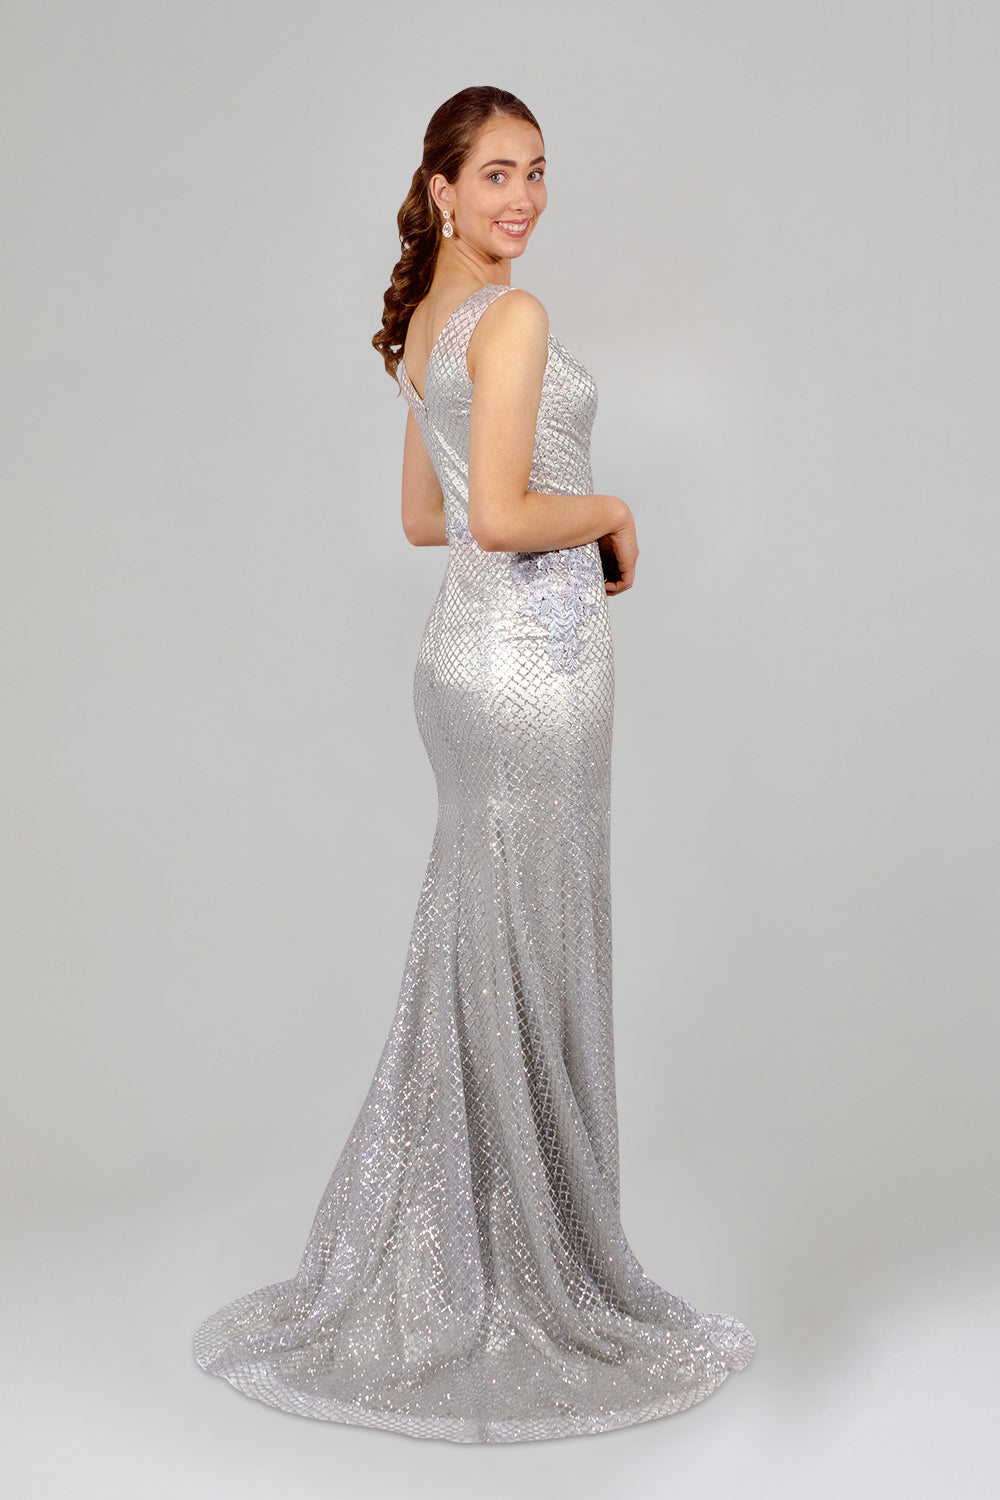 custom made silver formal dresses australia online envious bridal & formal